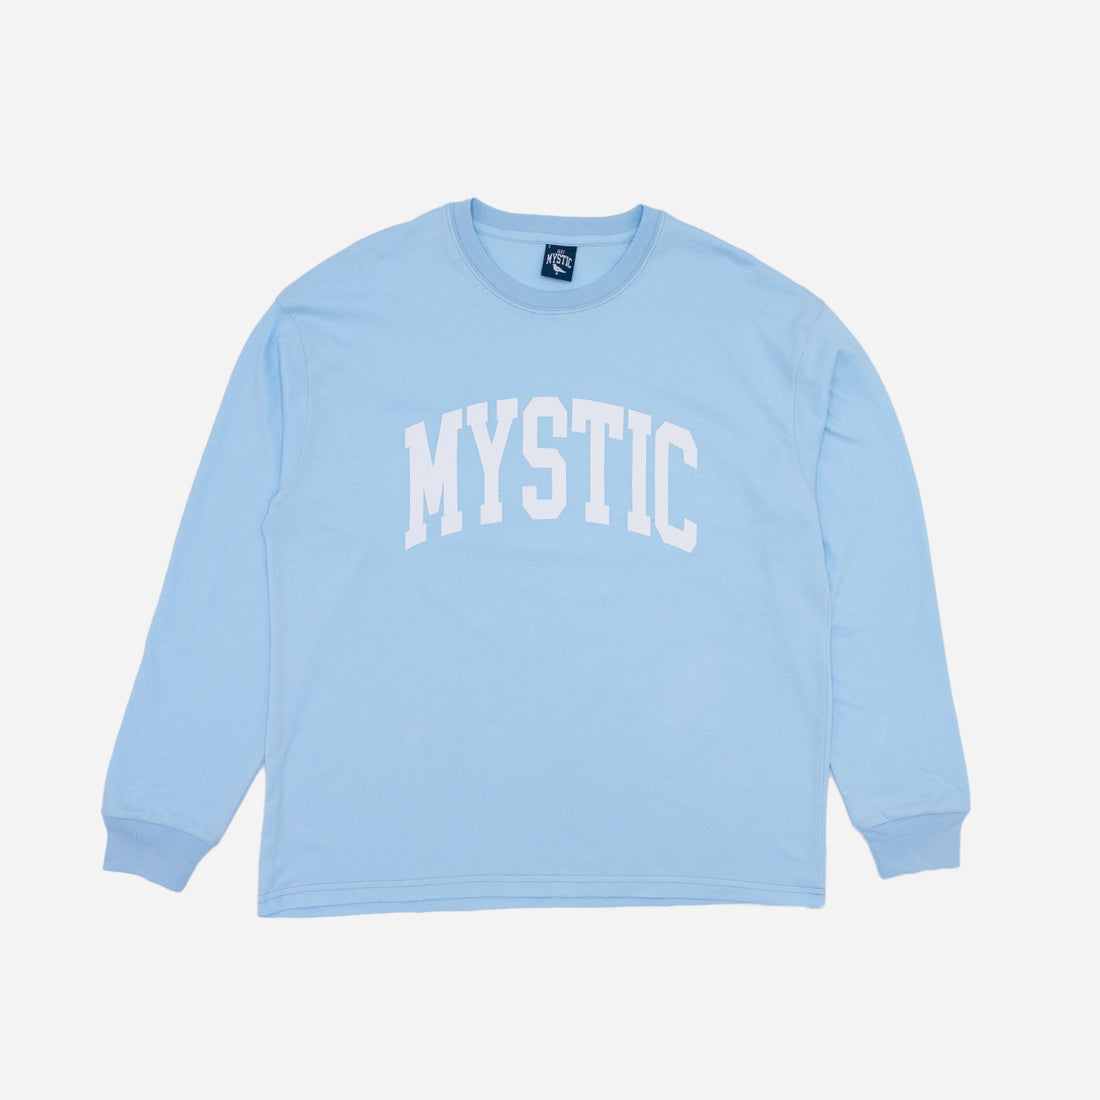 Mystic Long-Sleeve T-Shirt in Light Blue